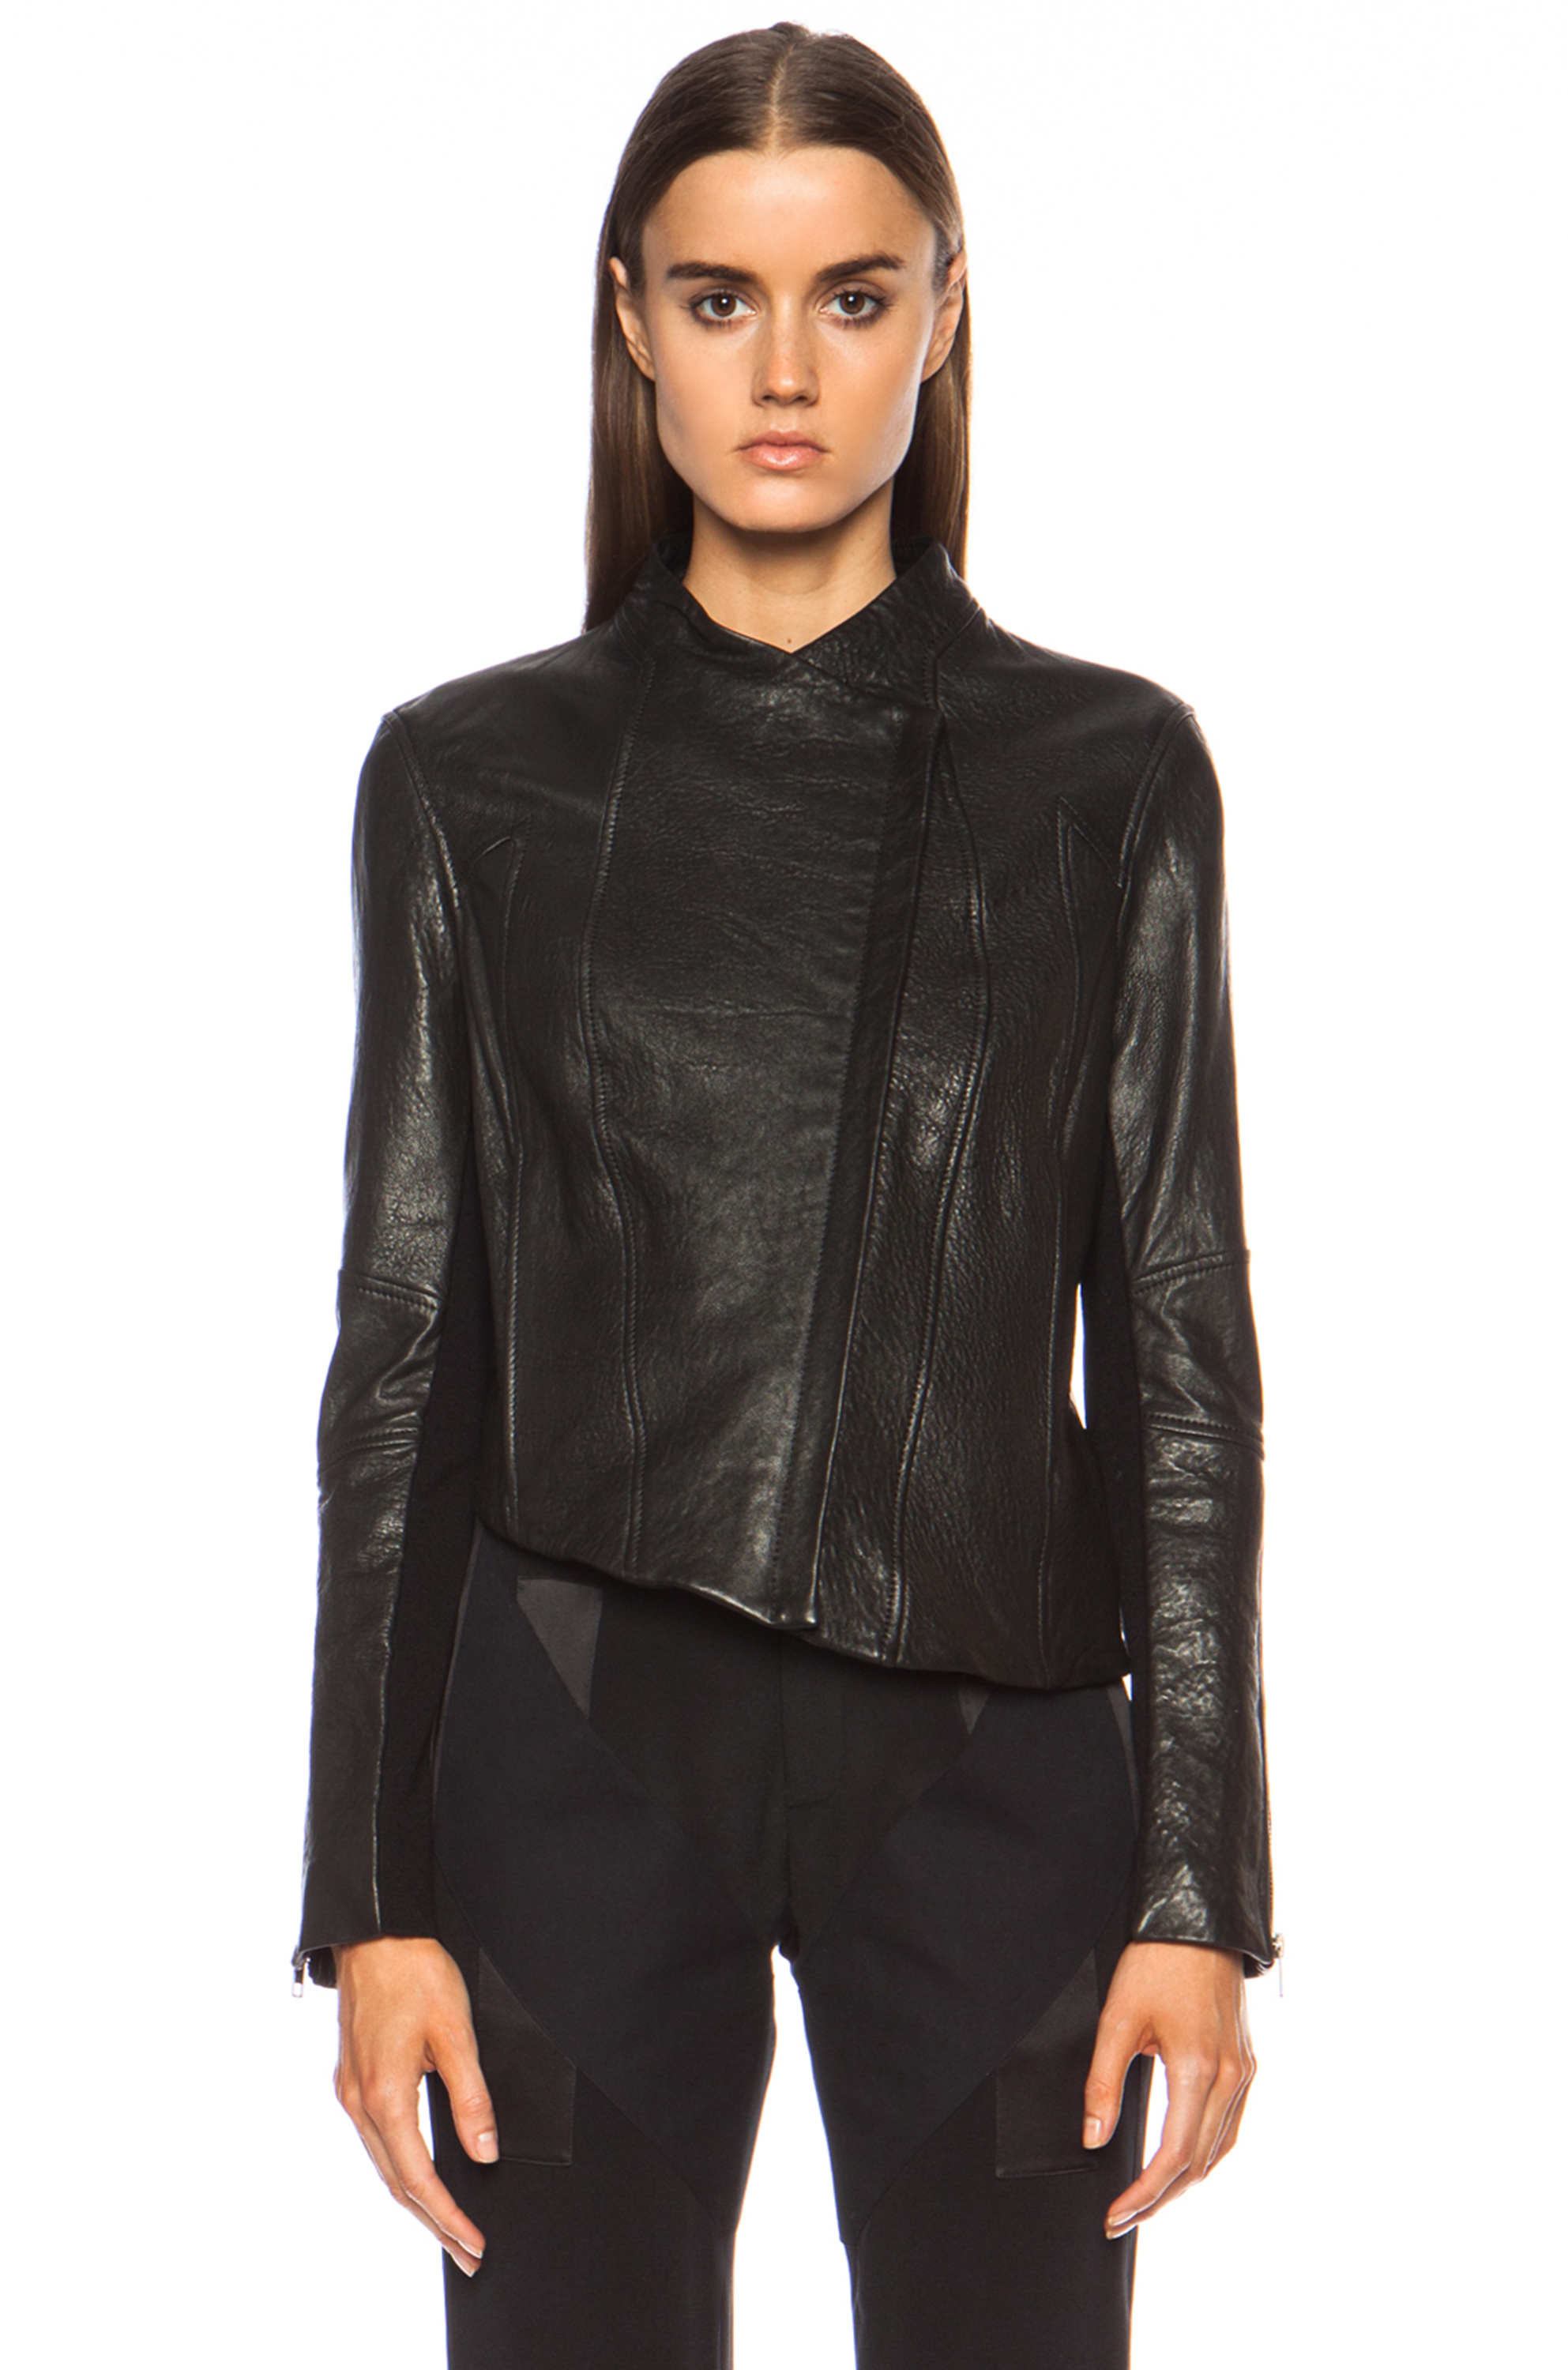 Helmut Lang Asymmetric Blistered Leather Jacket in Black - Lyst